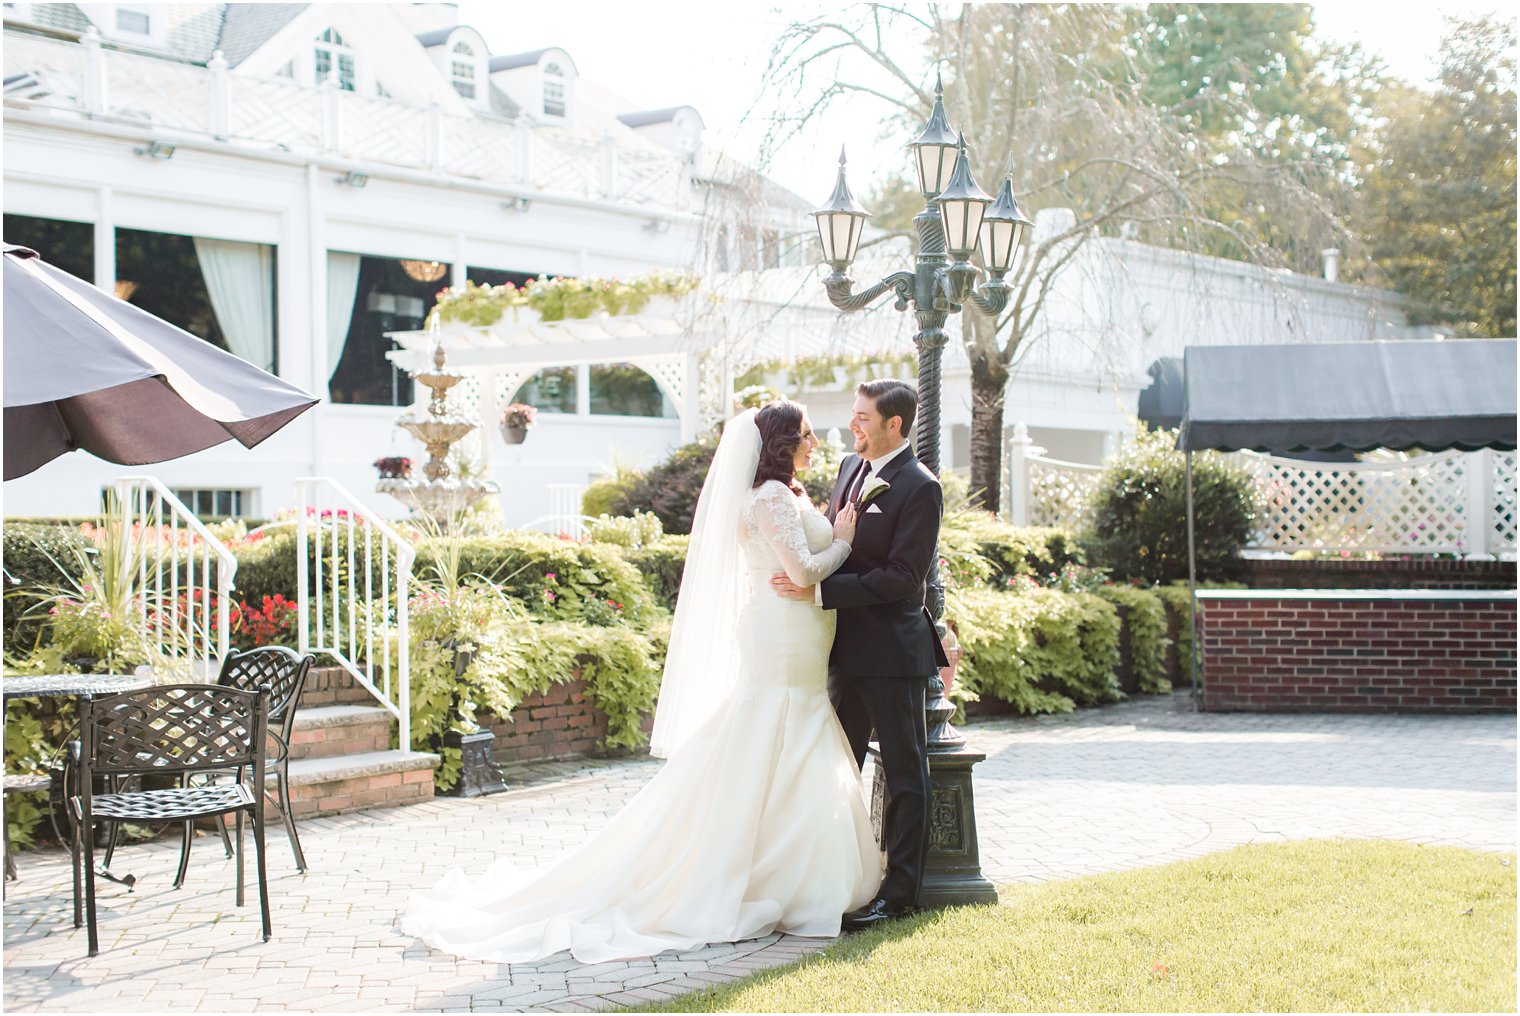 Romantic bride and groom photo in Shrewsbury NJ